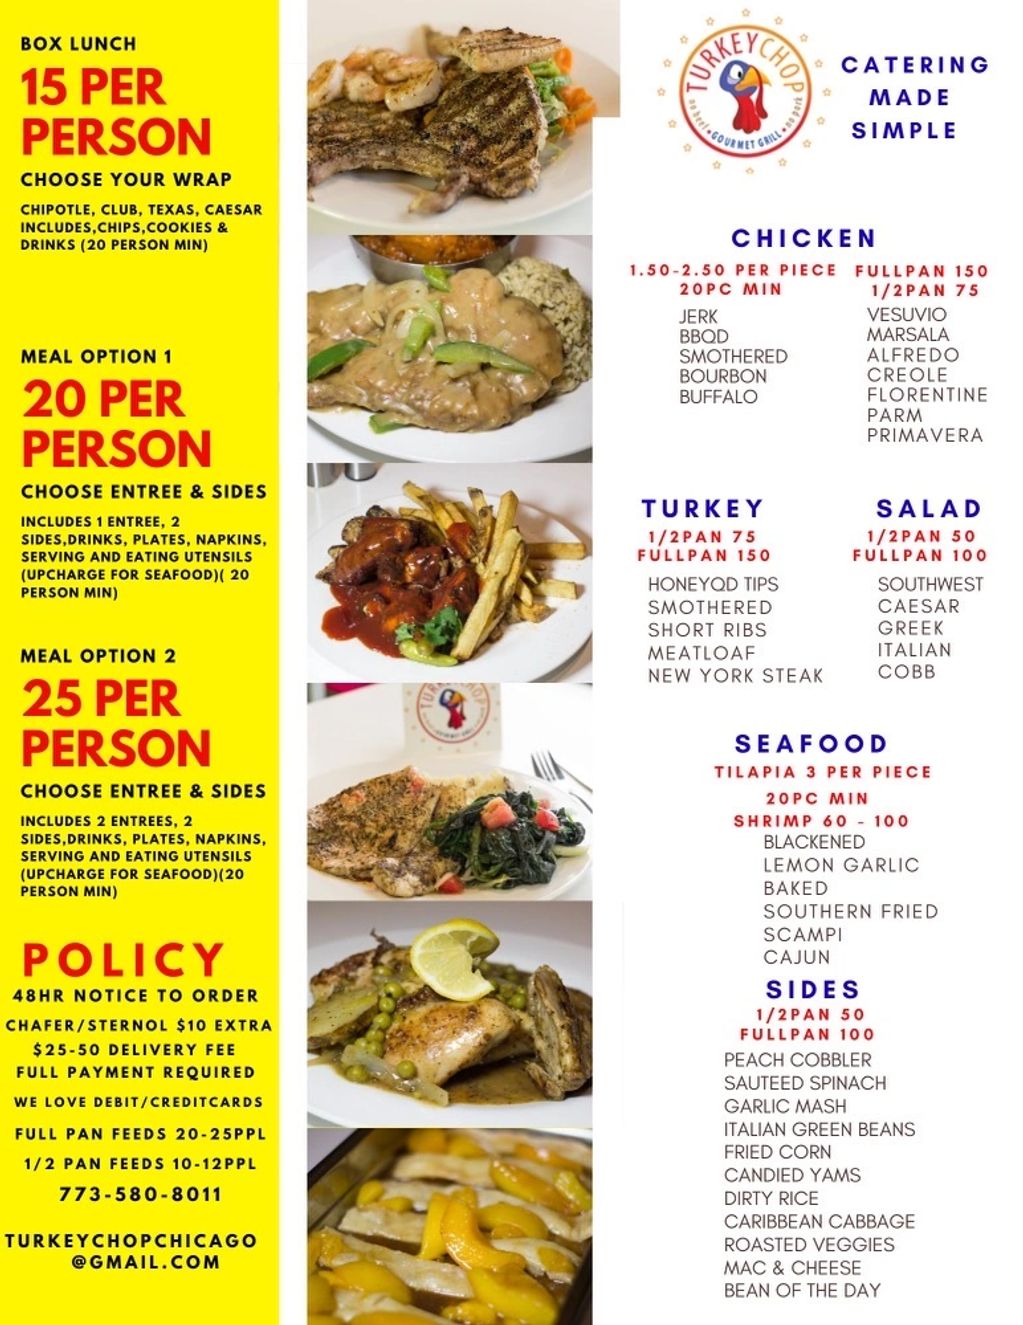 TurkeyChop Chicago Catering Services